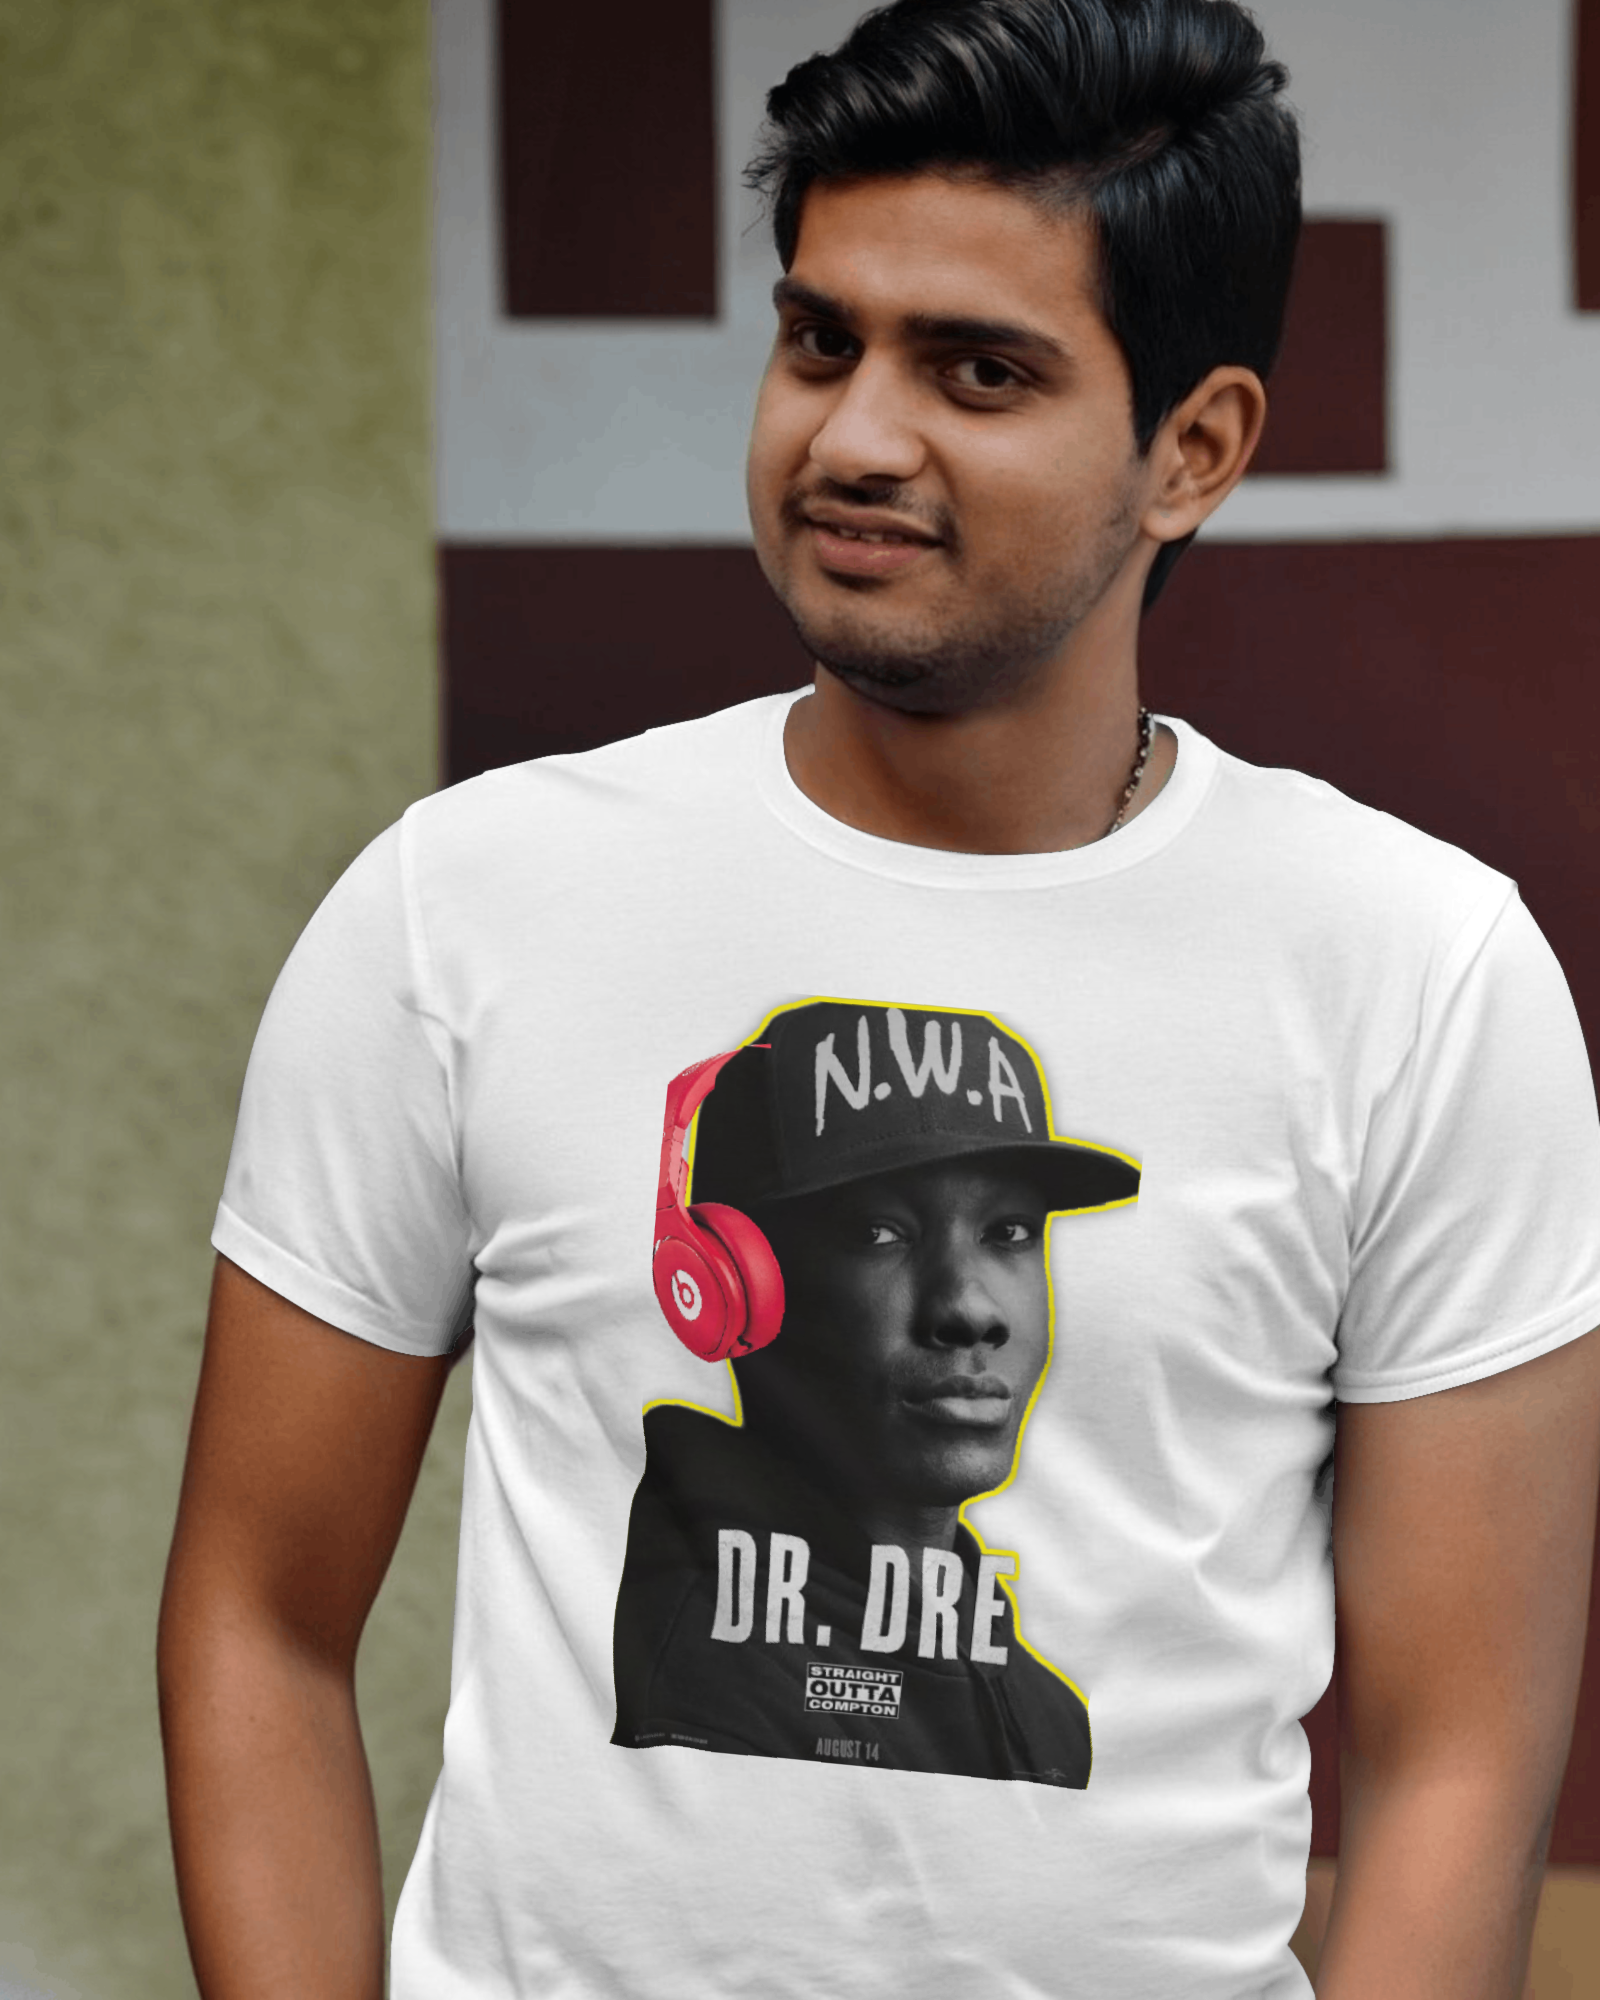 DR. DRE Printed Tshirt for Man - Women | Do Bronx Fan | Vintage Style